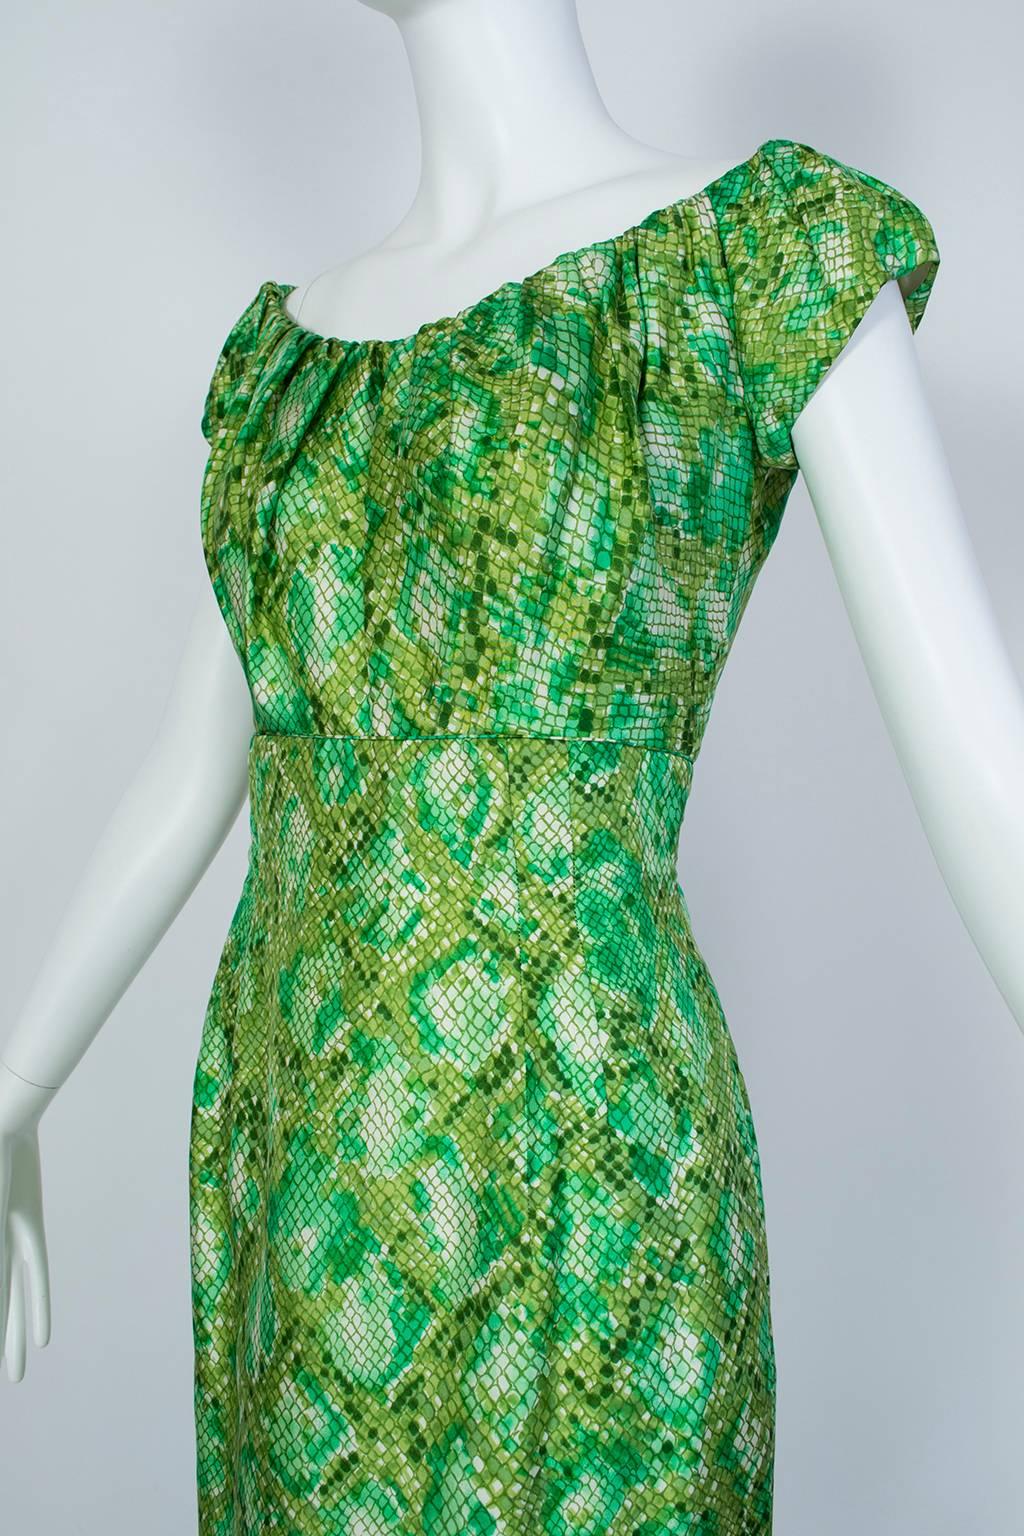 Mr Blackwell Off-Shoulder Snake Print Cocktail Dress and Wrap, 1960s 1